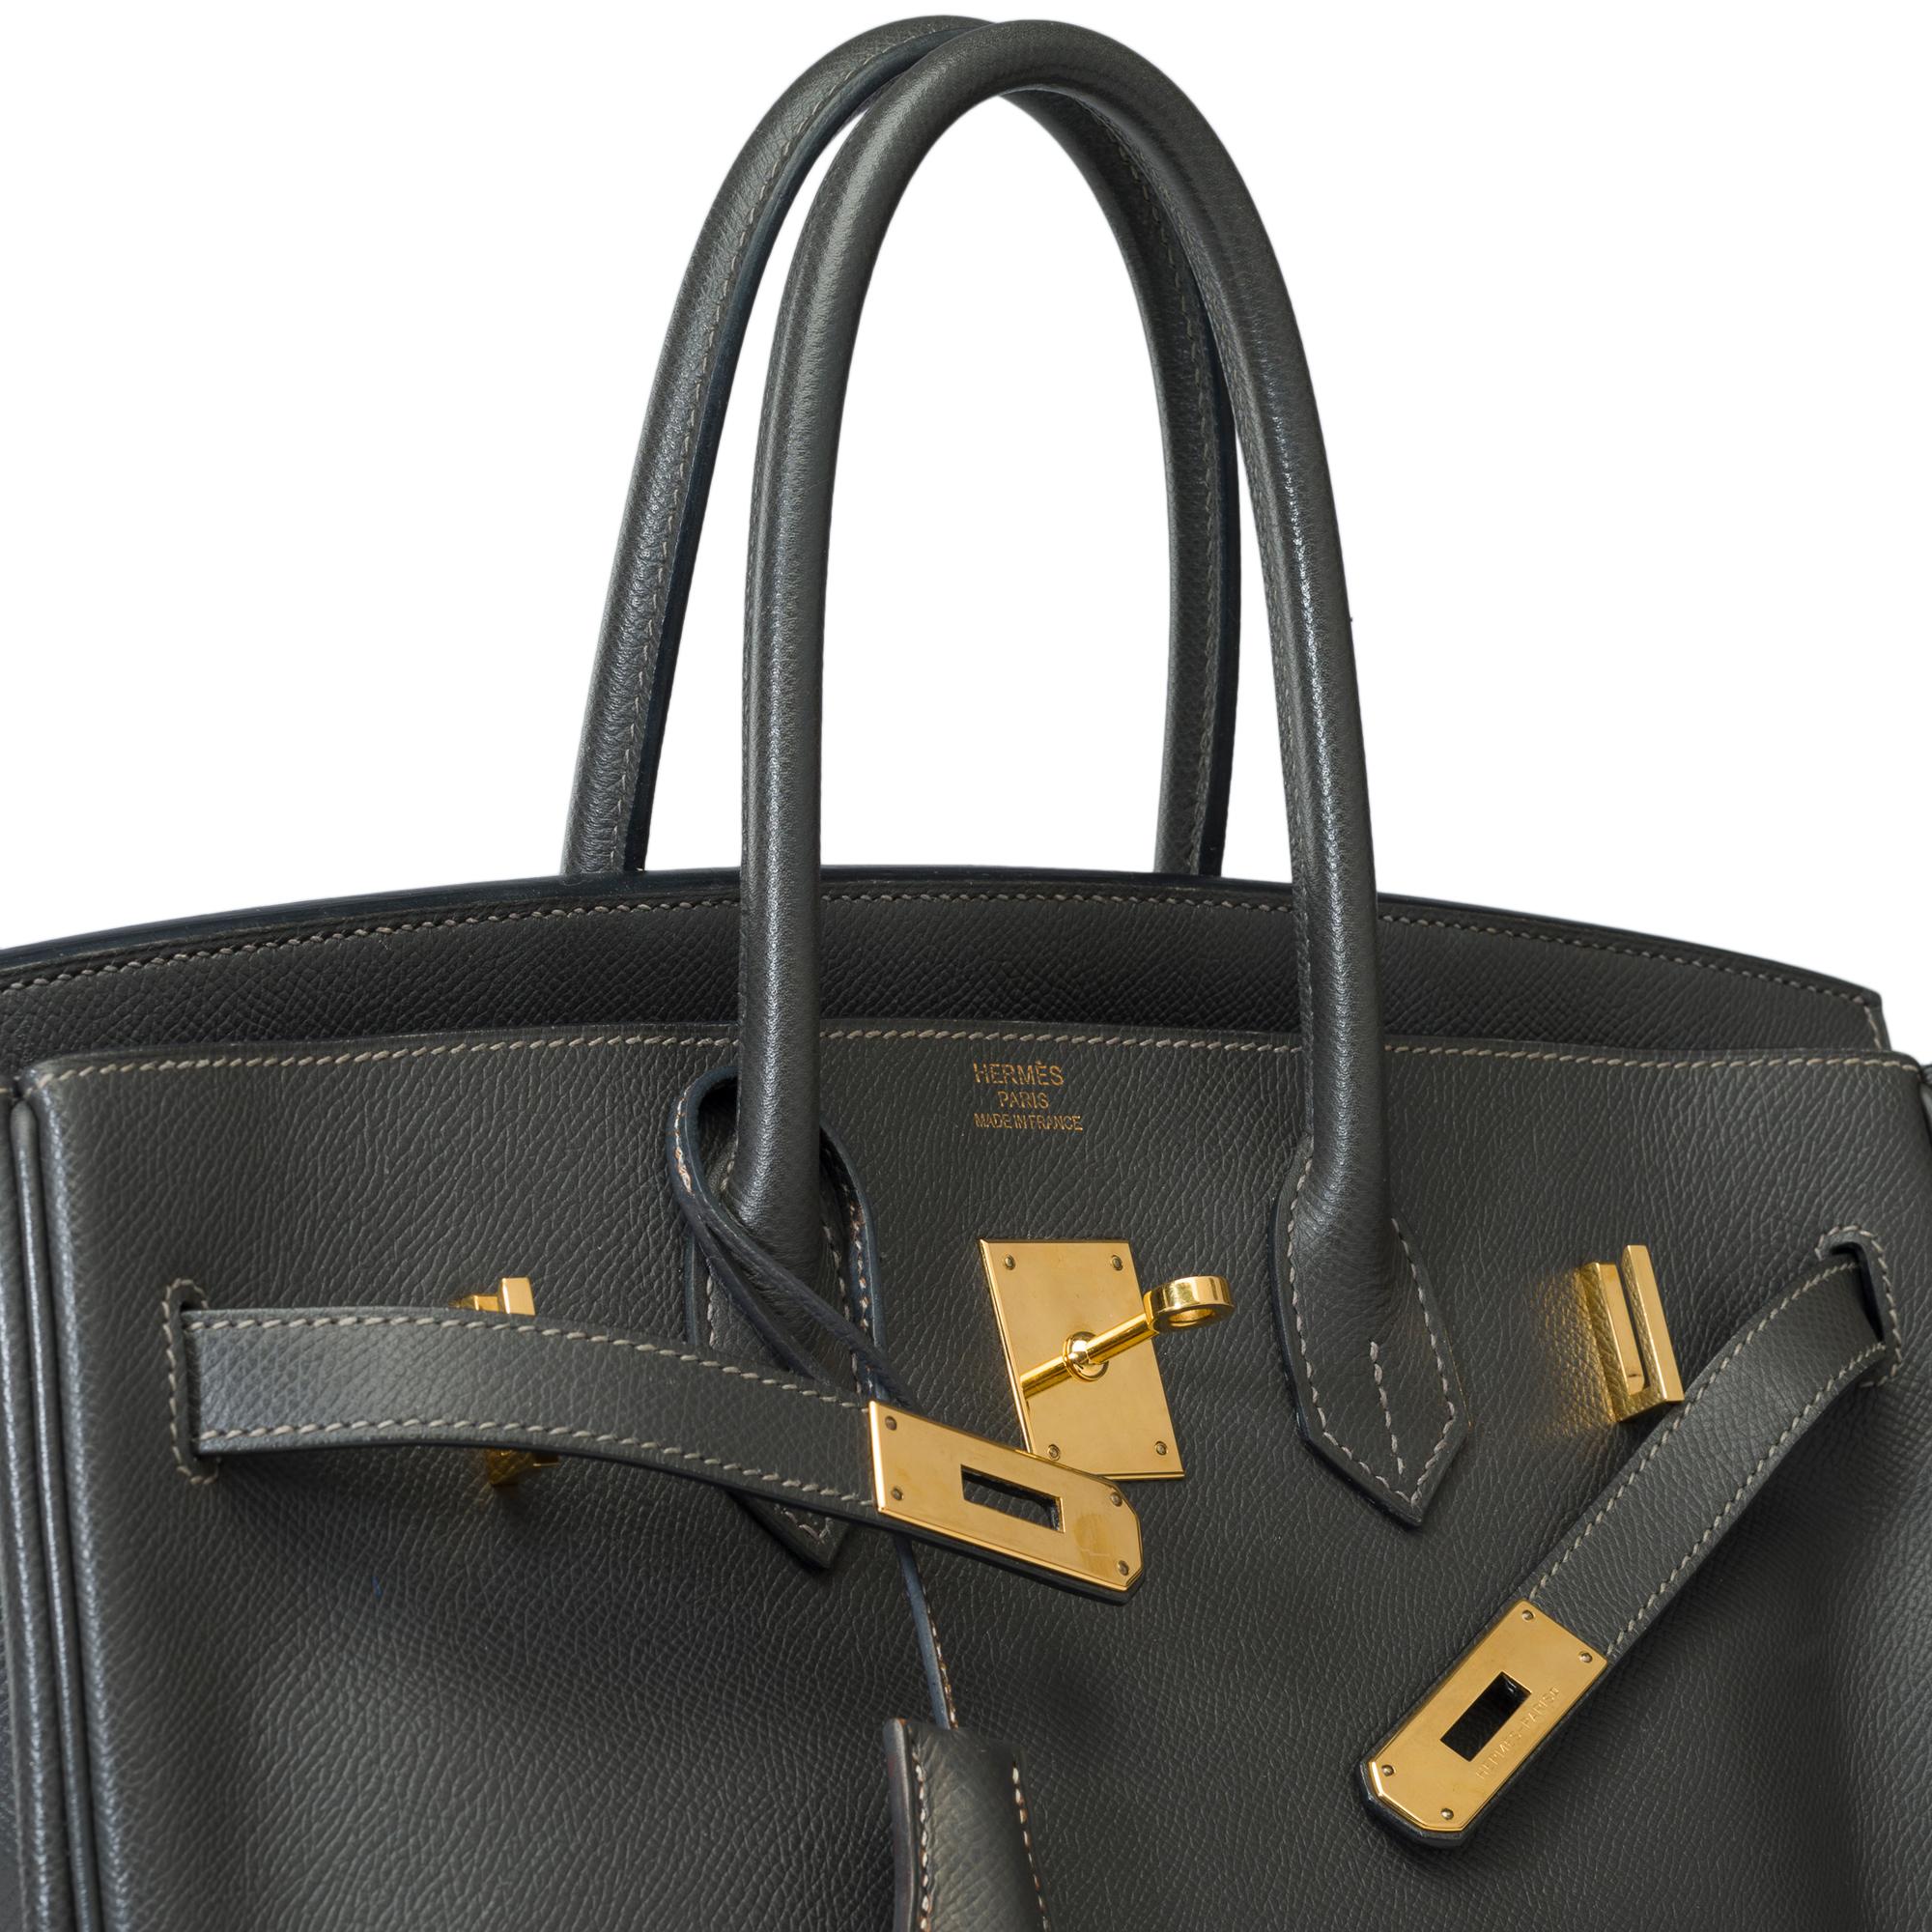 Amazing Hermès Birkin 35 handbag in Gray Graphite Epsom leather, GHW For Sale 3